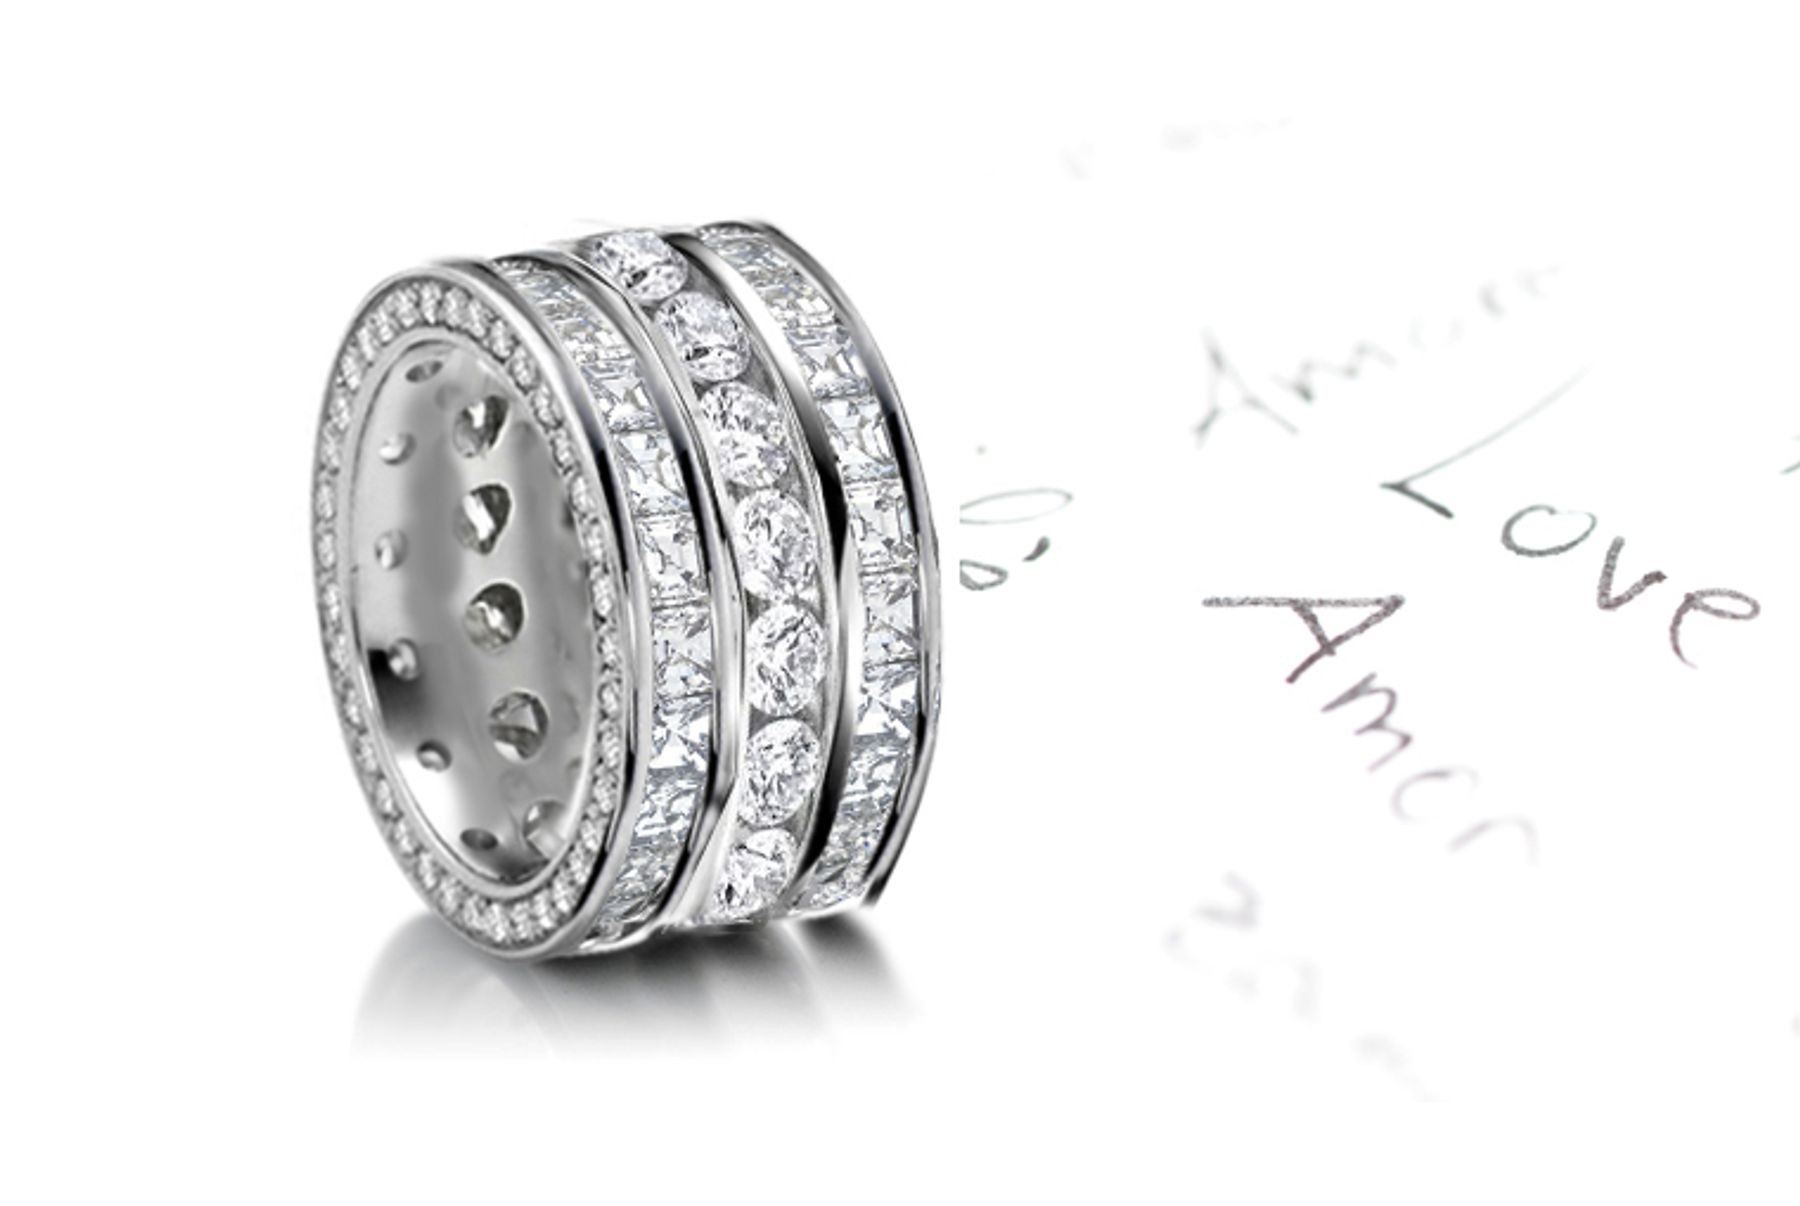 Designer: Glistening Three Row Diamond Eternity Ring in 14k Gold